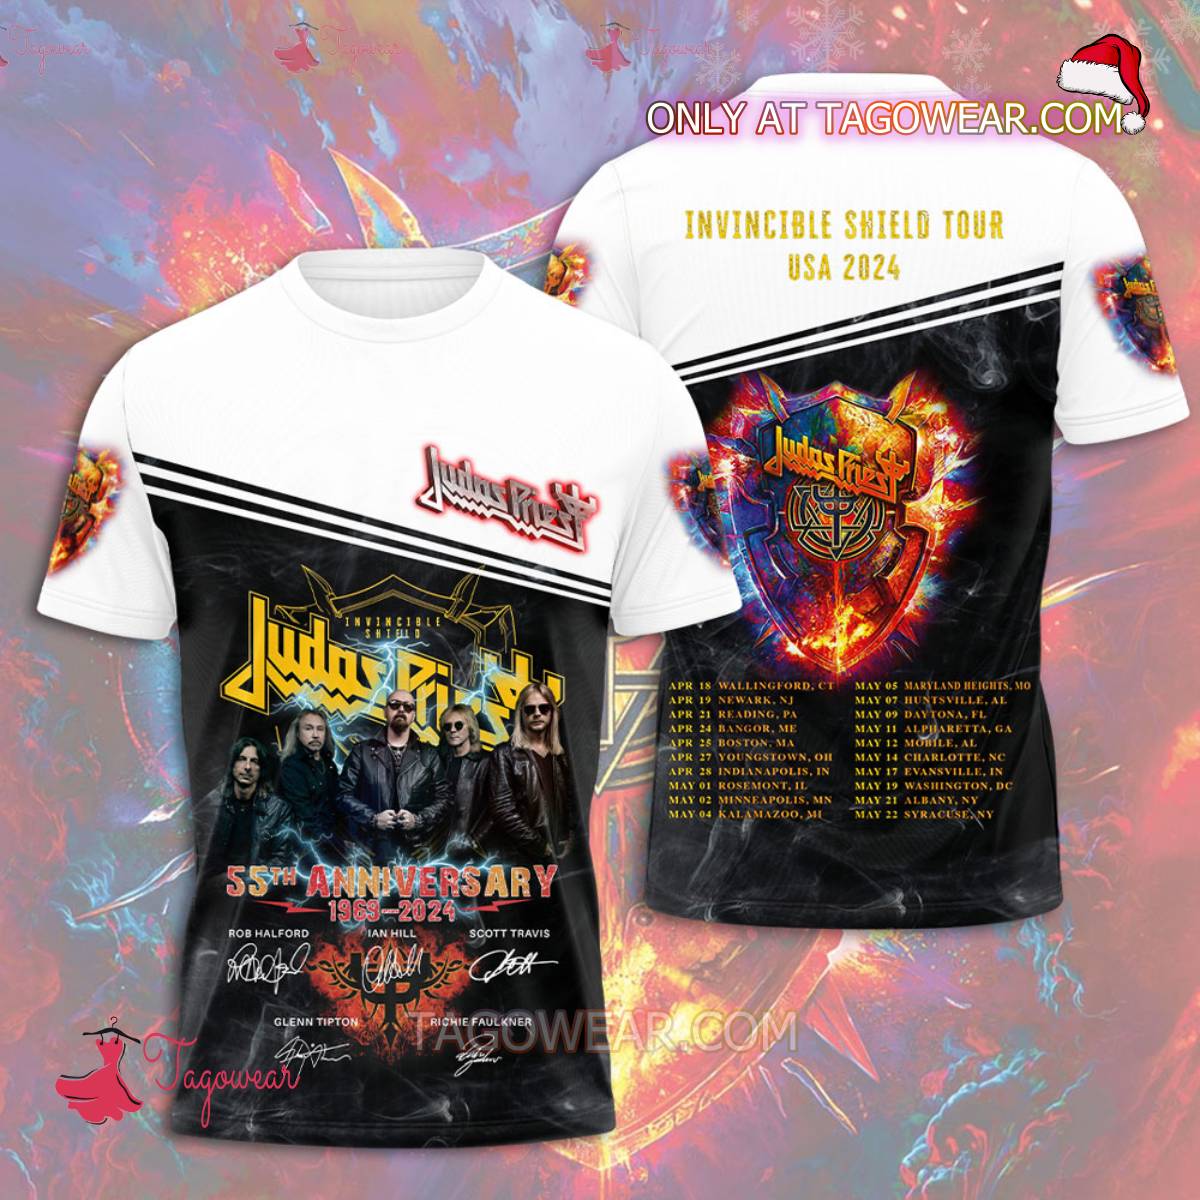 Judas Priest 55th Anniversary Invincible Shield Tour Usa 2024 Signatures T-shirt, Hoodie